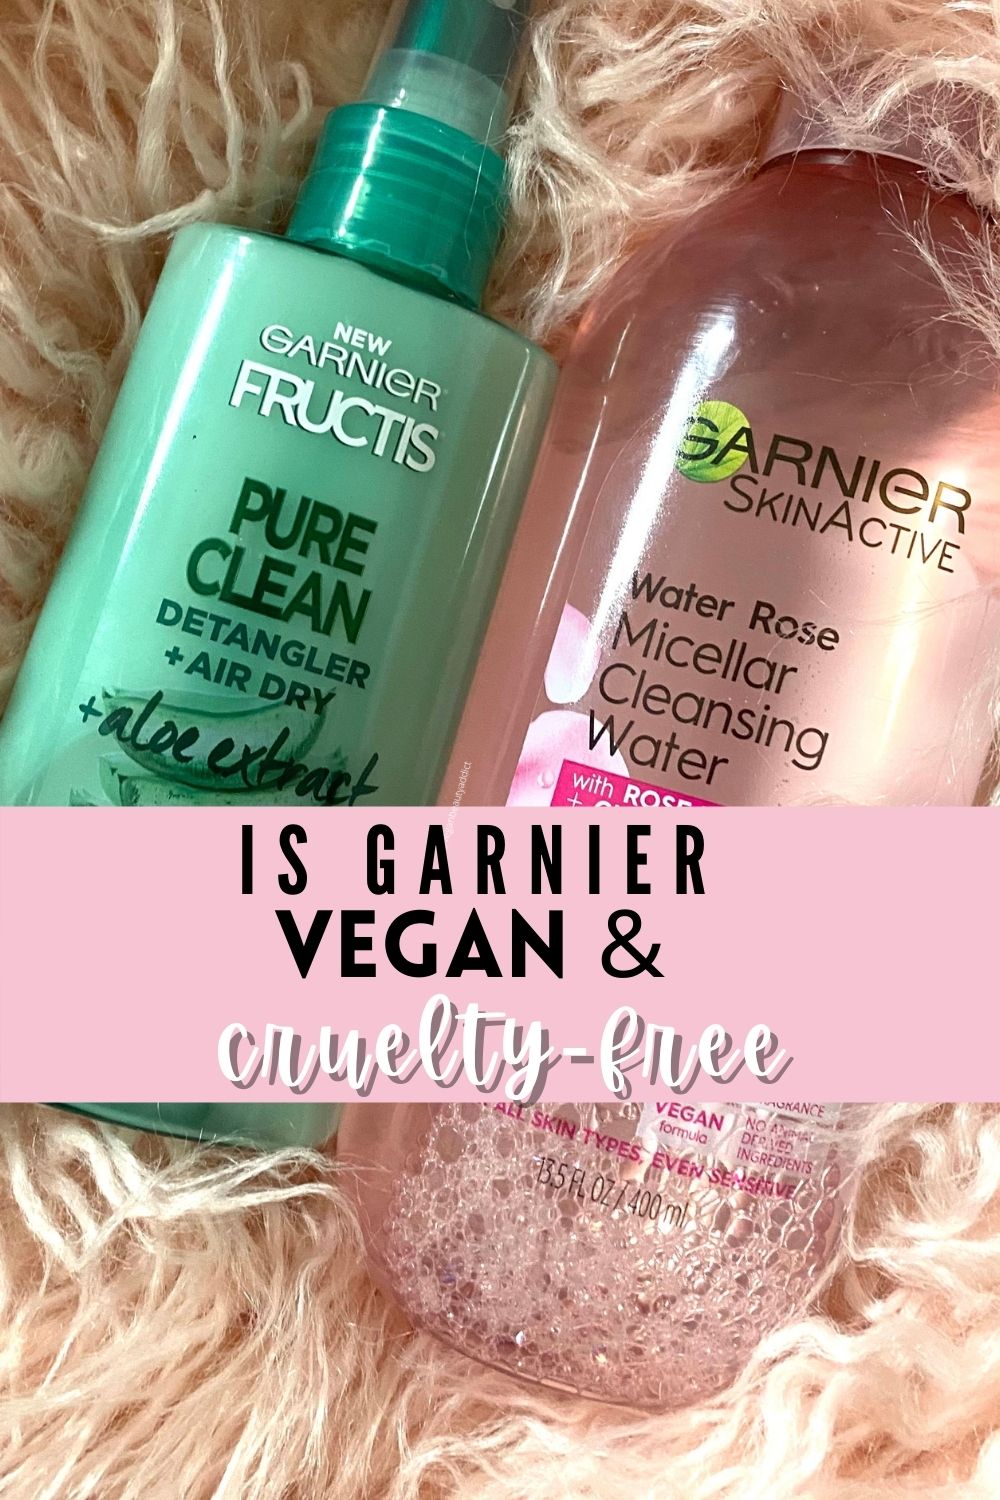 Garnier Vegan Product List (Cruelty-Free)